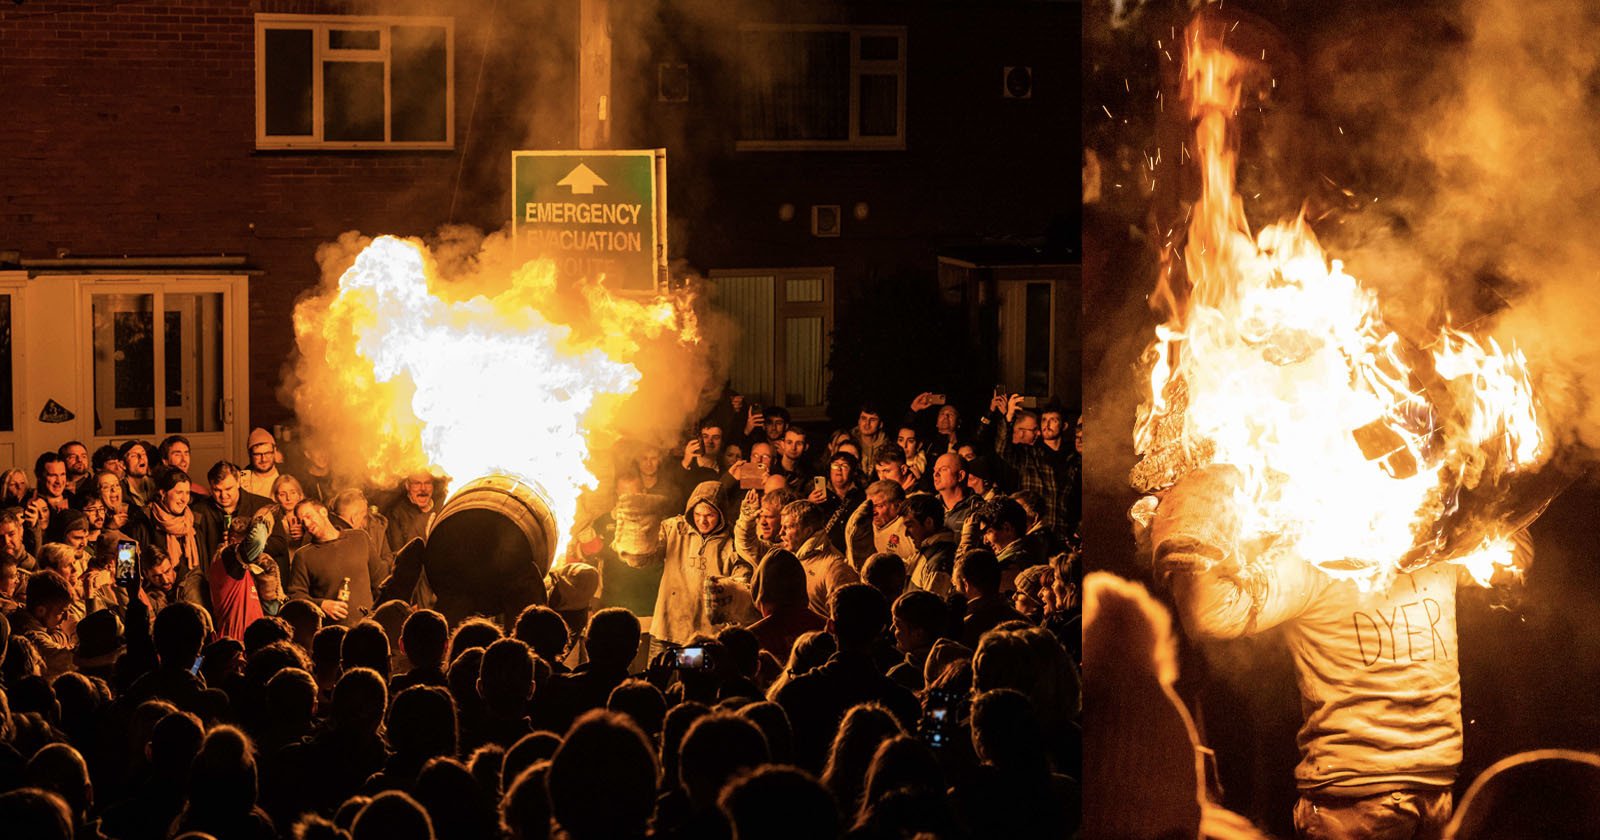  wild photos bizarre british tradition where flaming barrels 